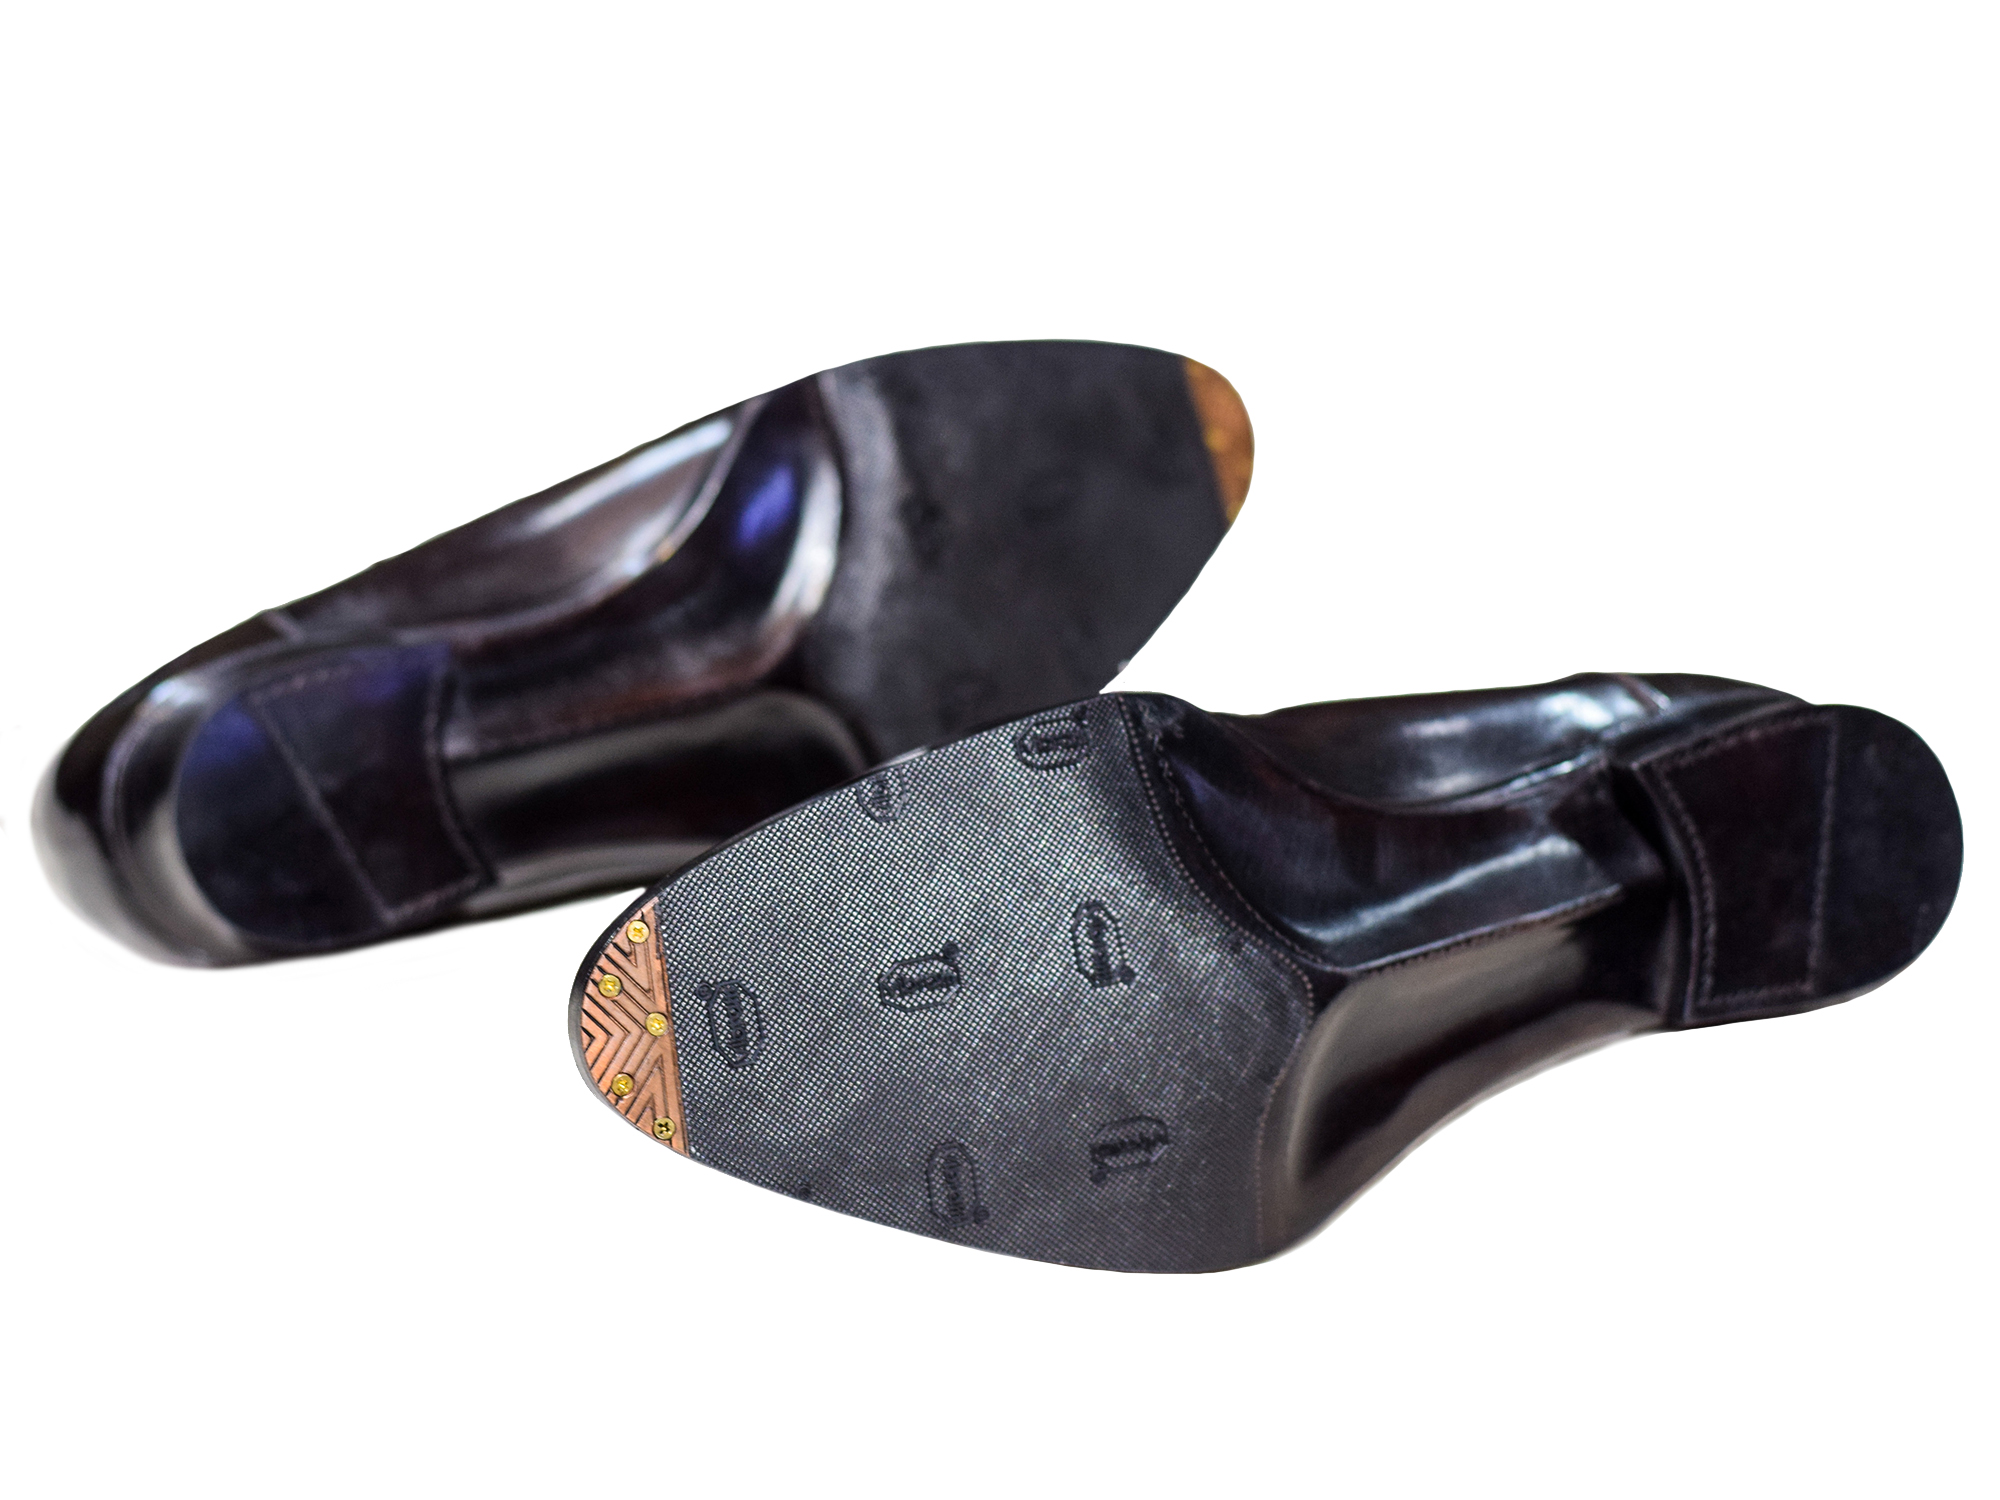 MTO Balmoral Shoes (Premium line)